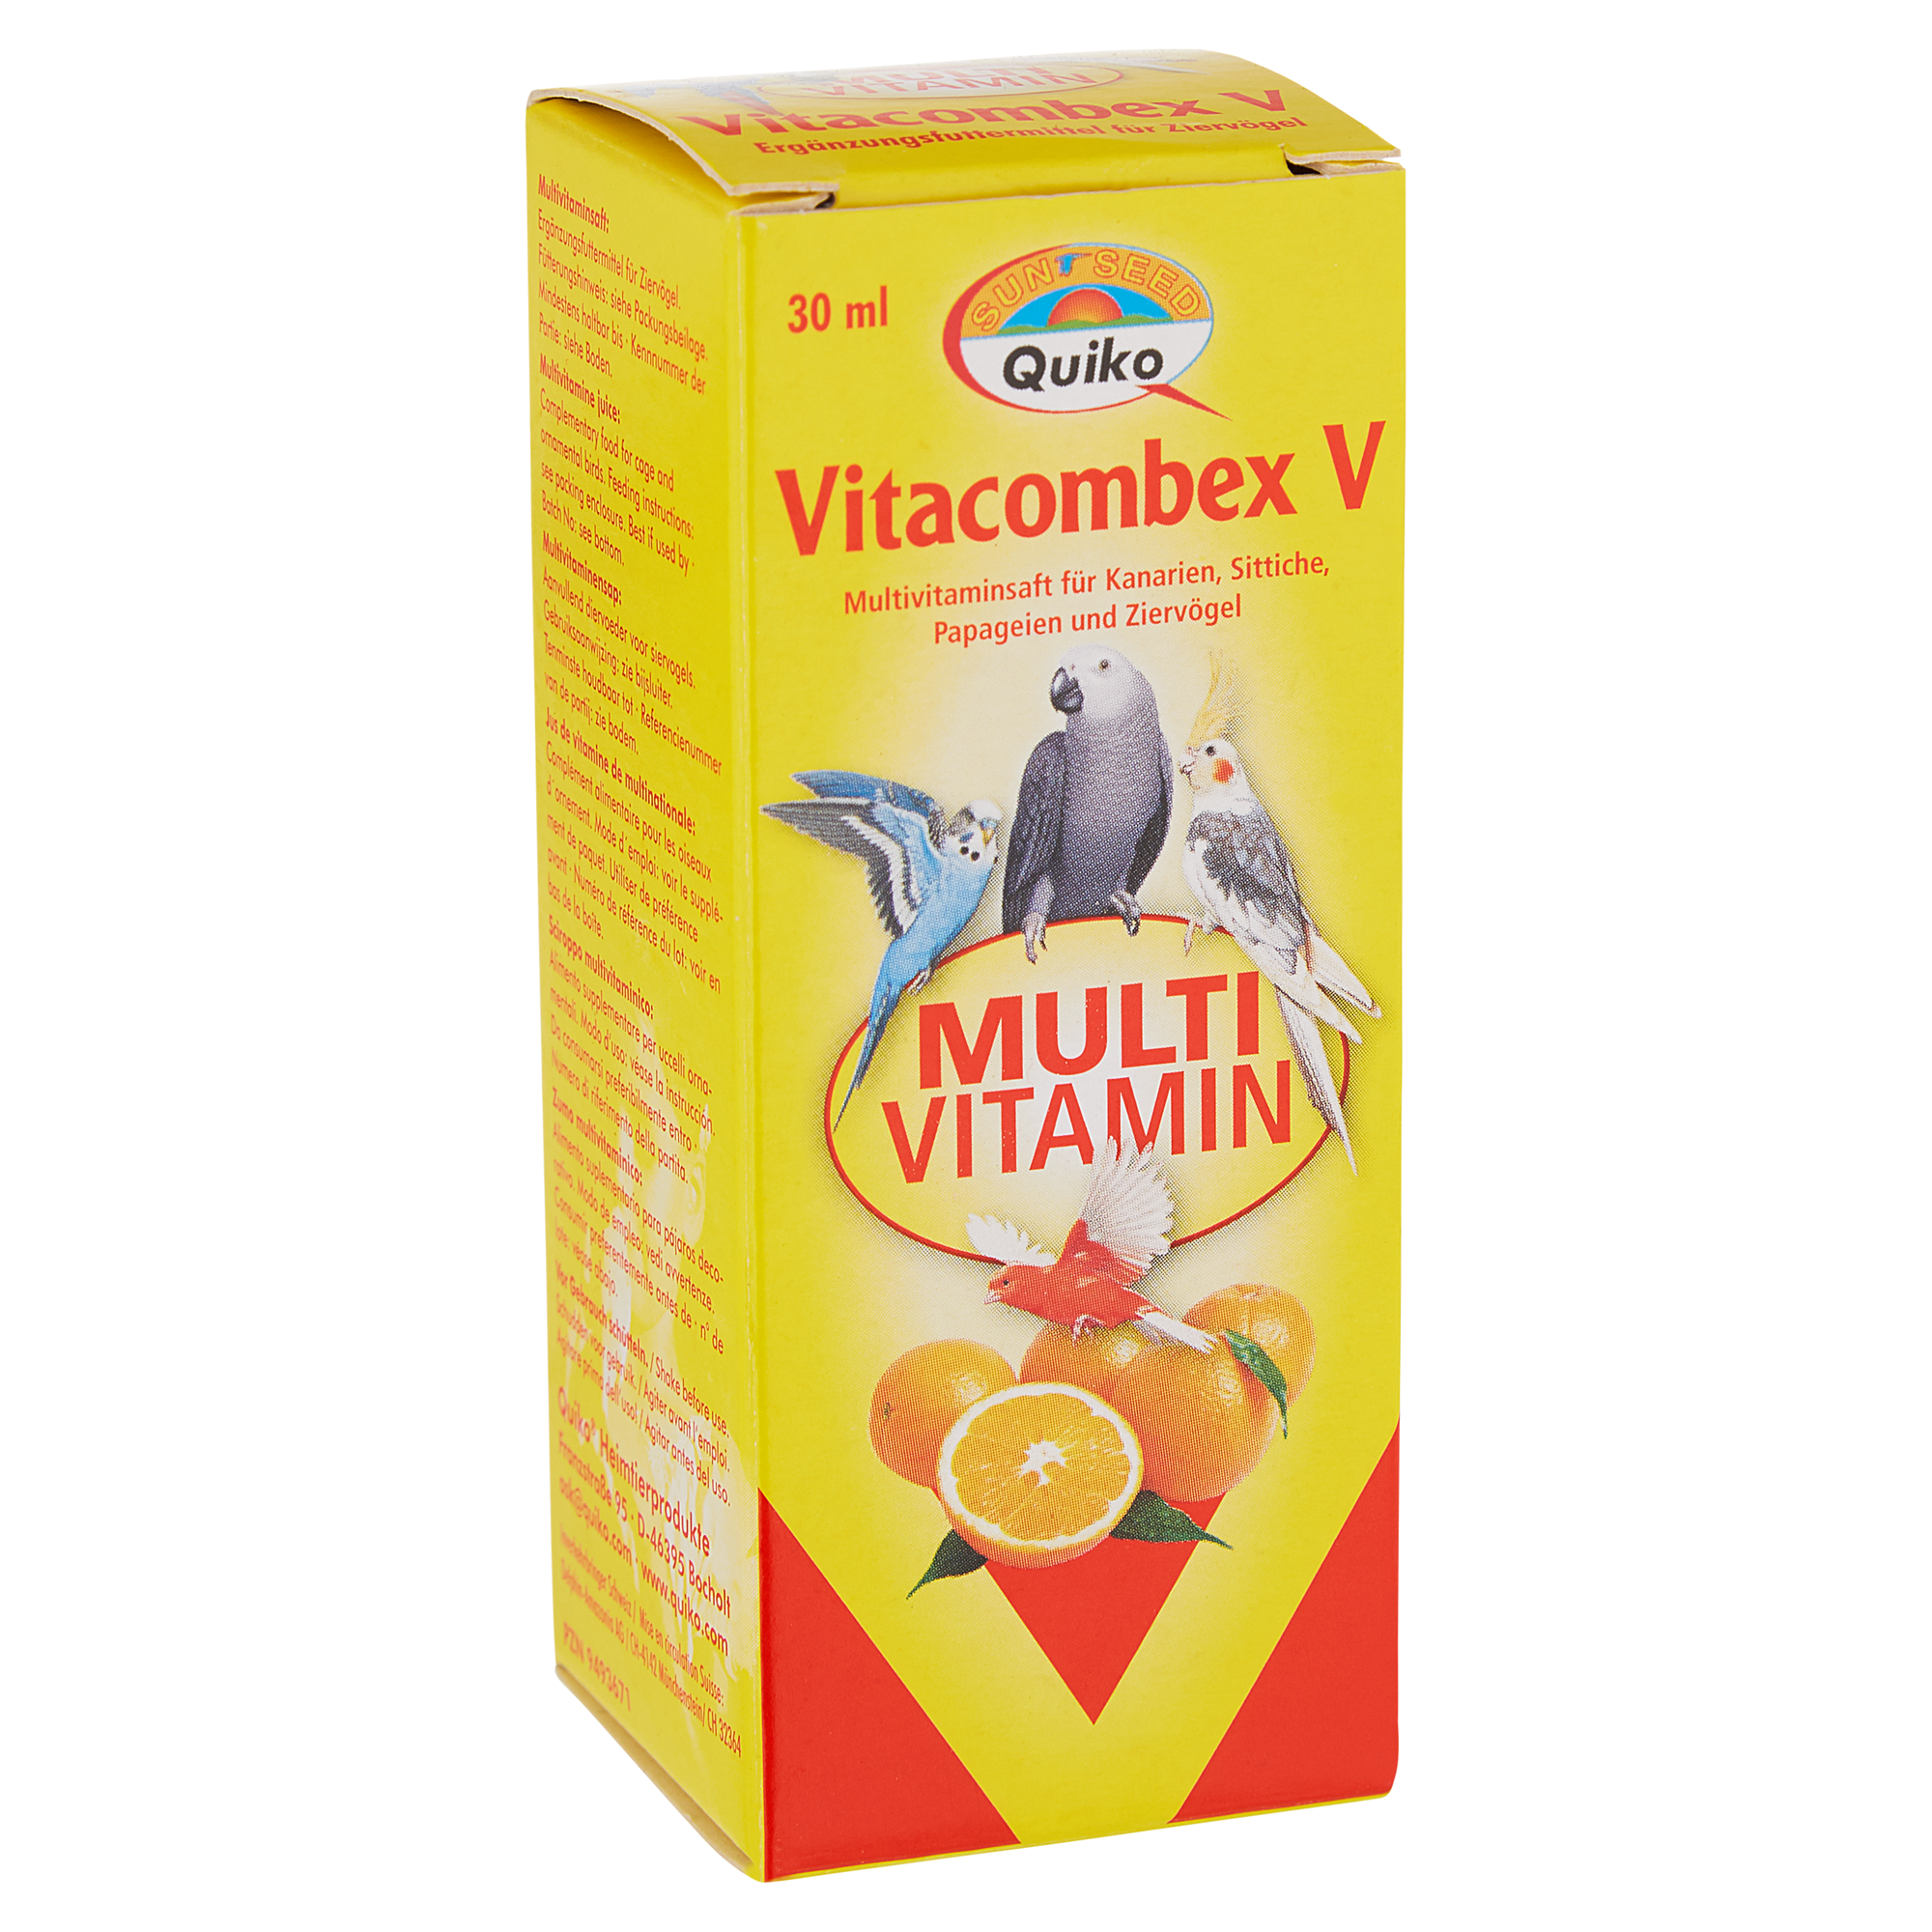 Multivitaminsaft "Vitacombex V" für Vögel 30 ml + product picture